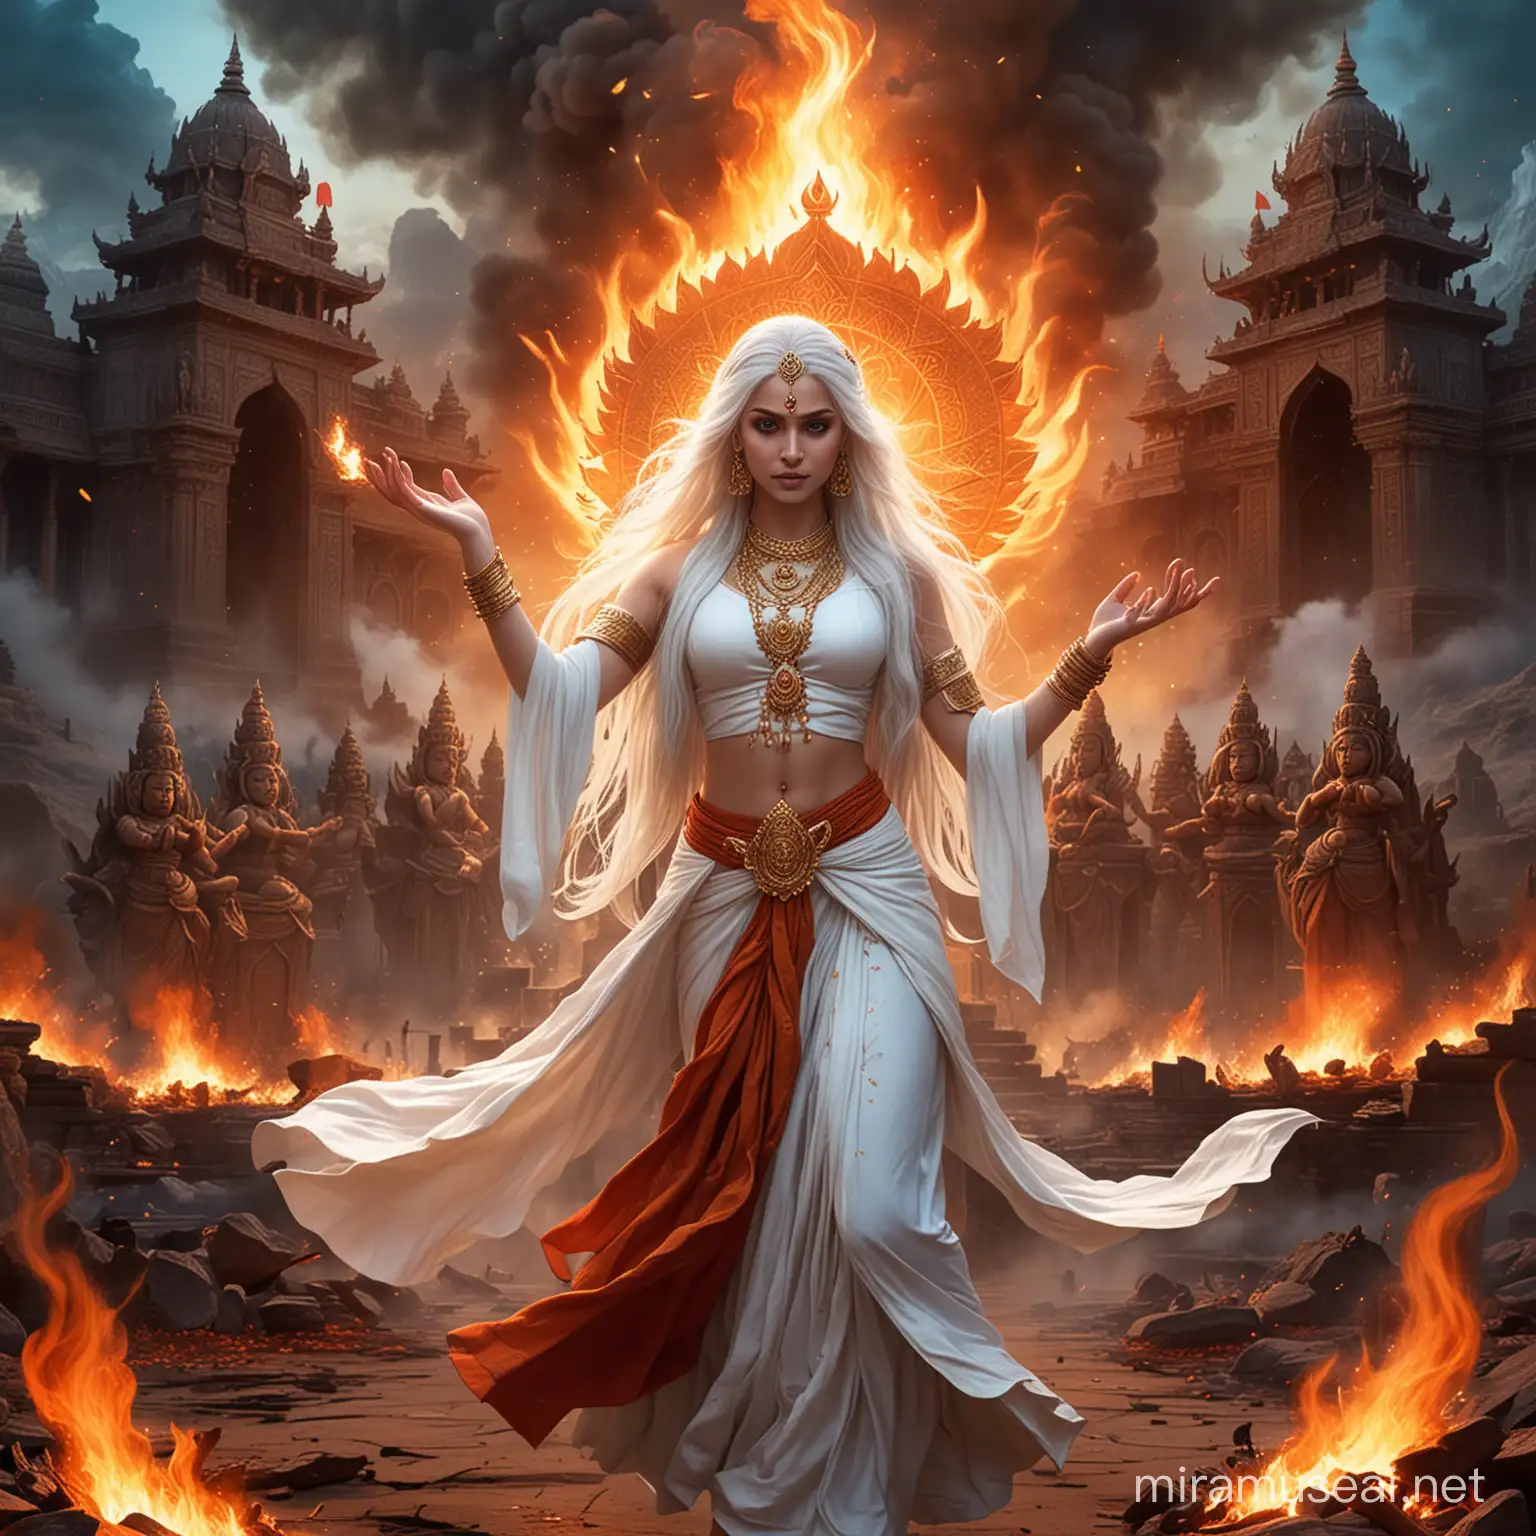 Fiery Combat Kayashiel Empress Confronted by Hindu Deities in a Dark Palace